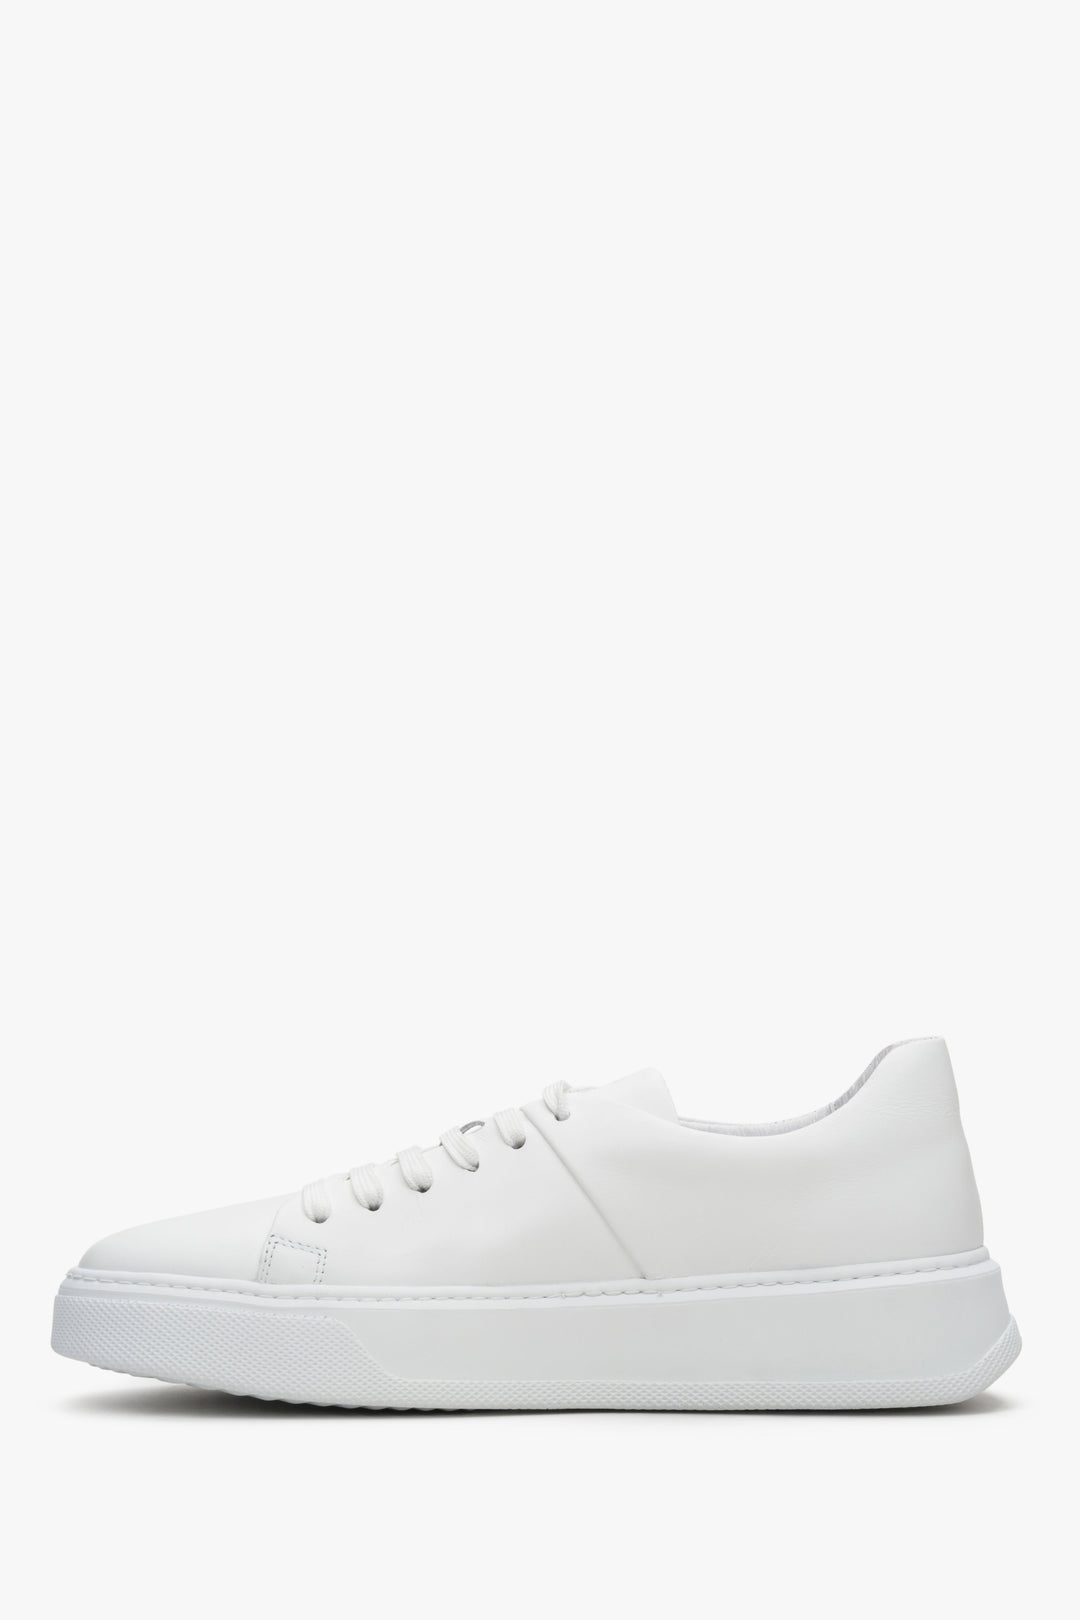 Białe sneakersy damskie Estro ze skóry naturalnej - profil buta.